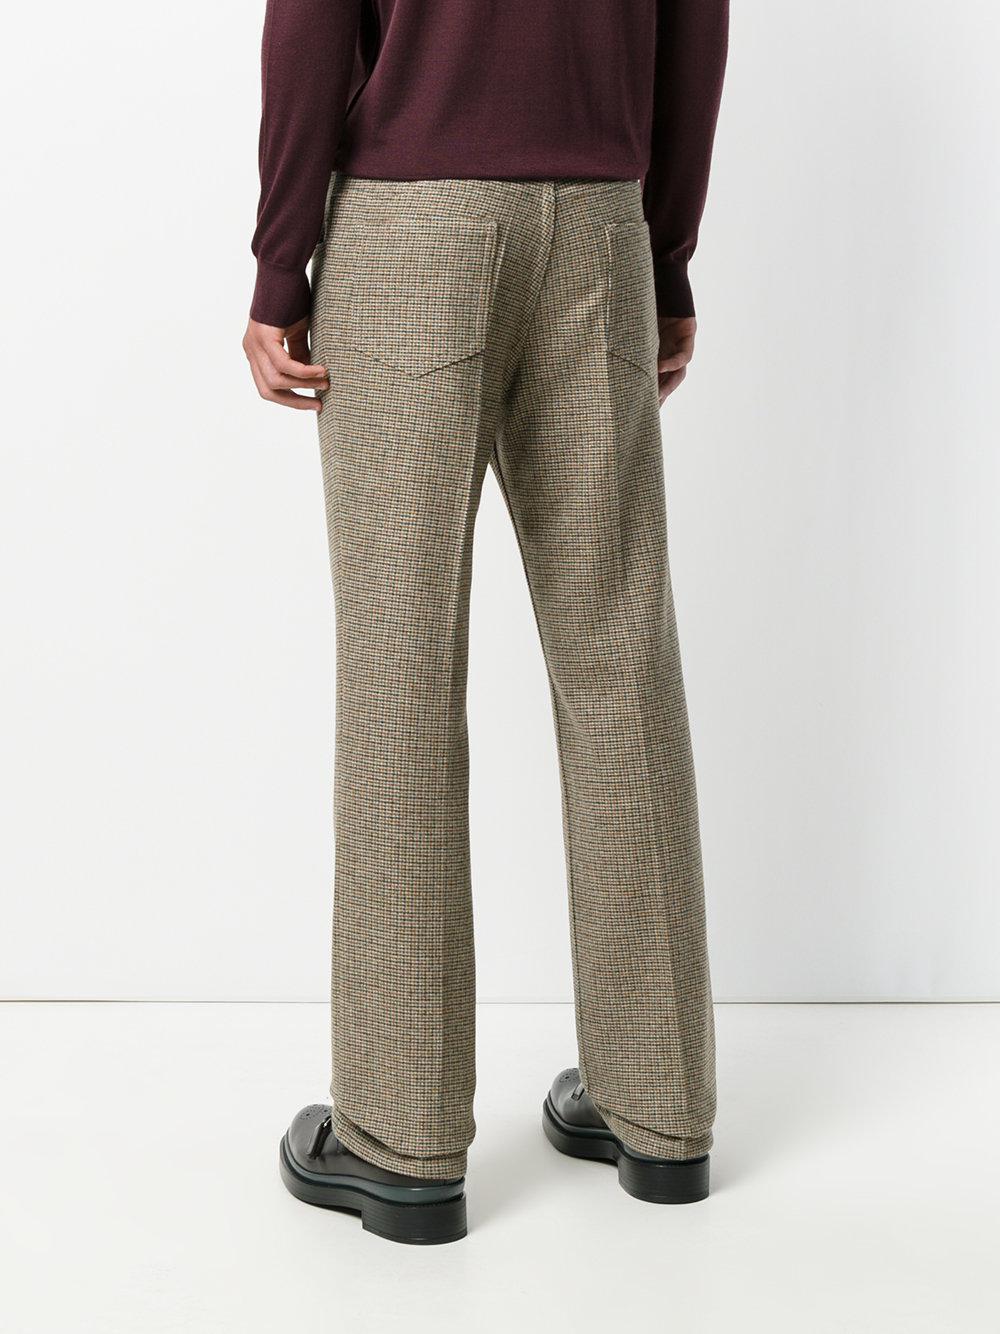 Prada Checked Tweed Trousers in Brown for Men - Lyst